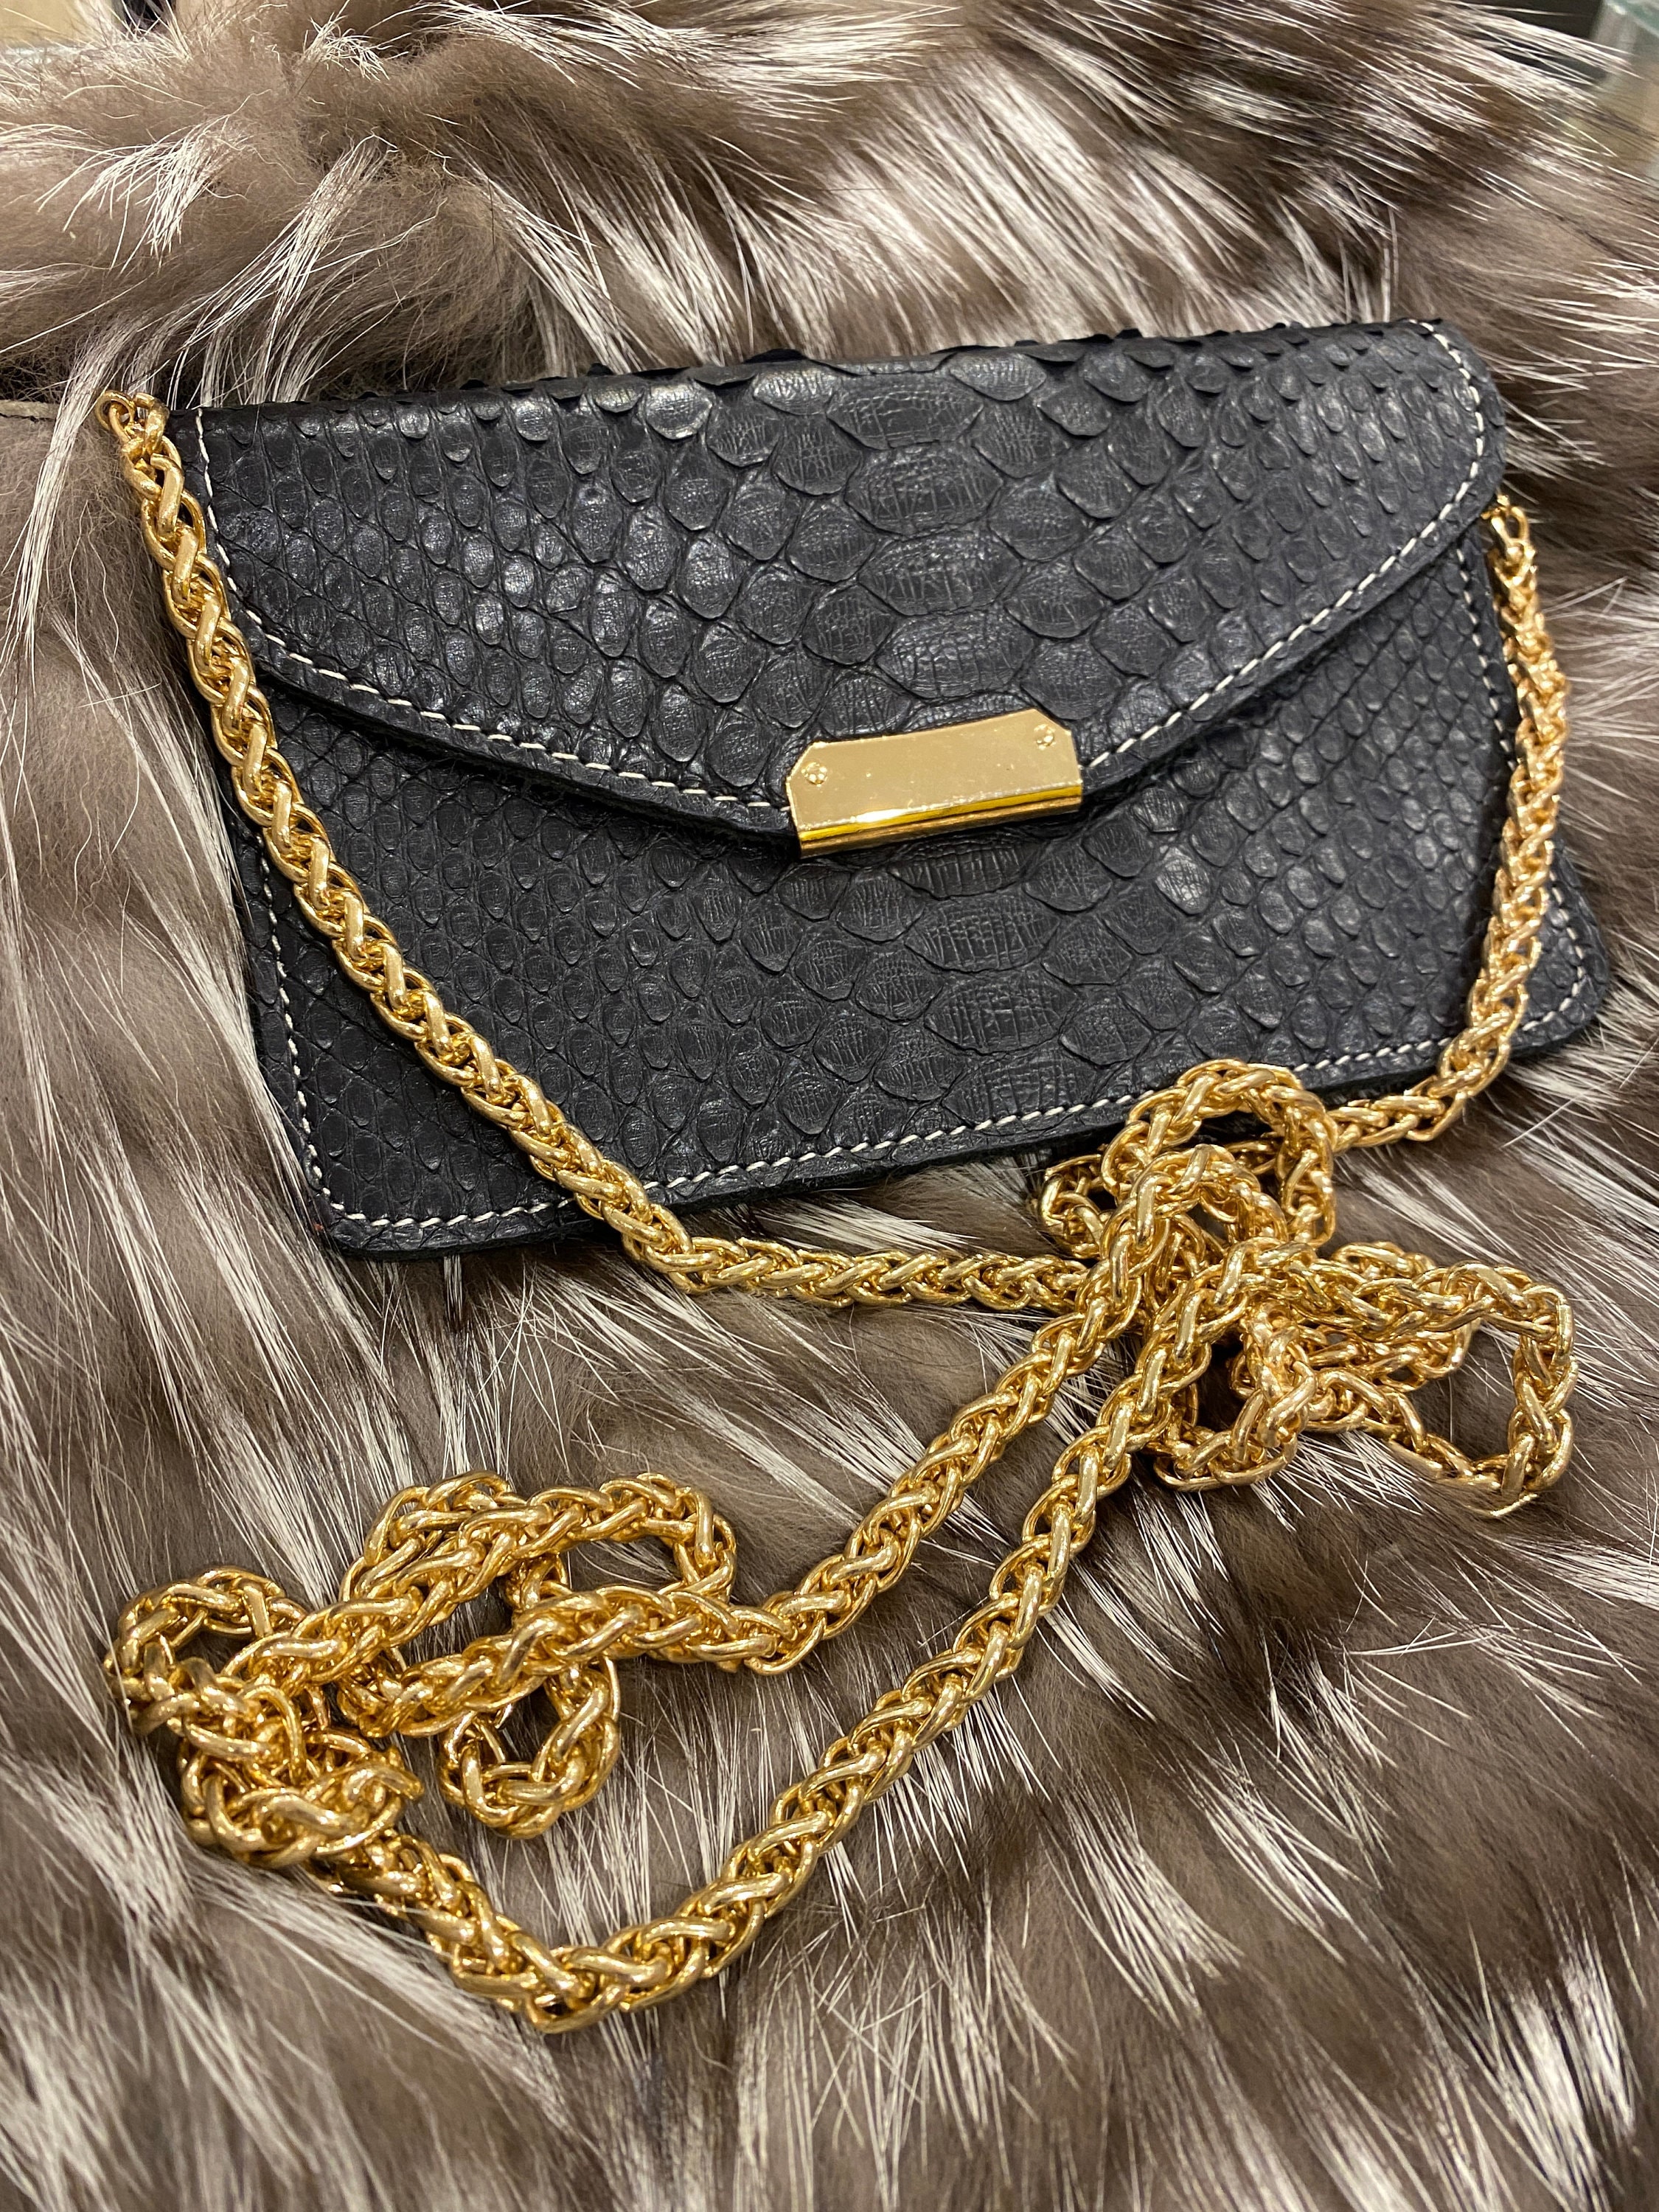 Super Quality Snakeskin Leather Women Handbag Shoulder Boston Bag Tote  Italian Bags Sac A Main Borse Candy Color Luxury Handbags